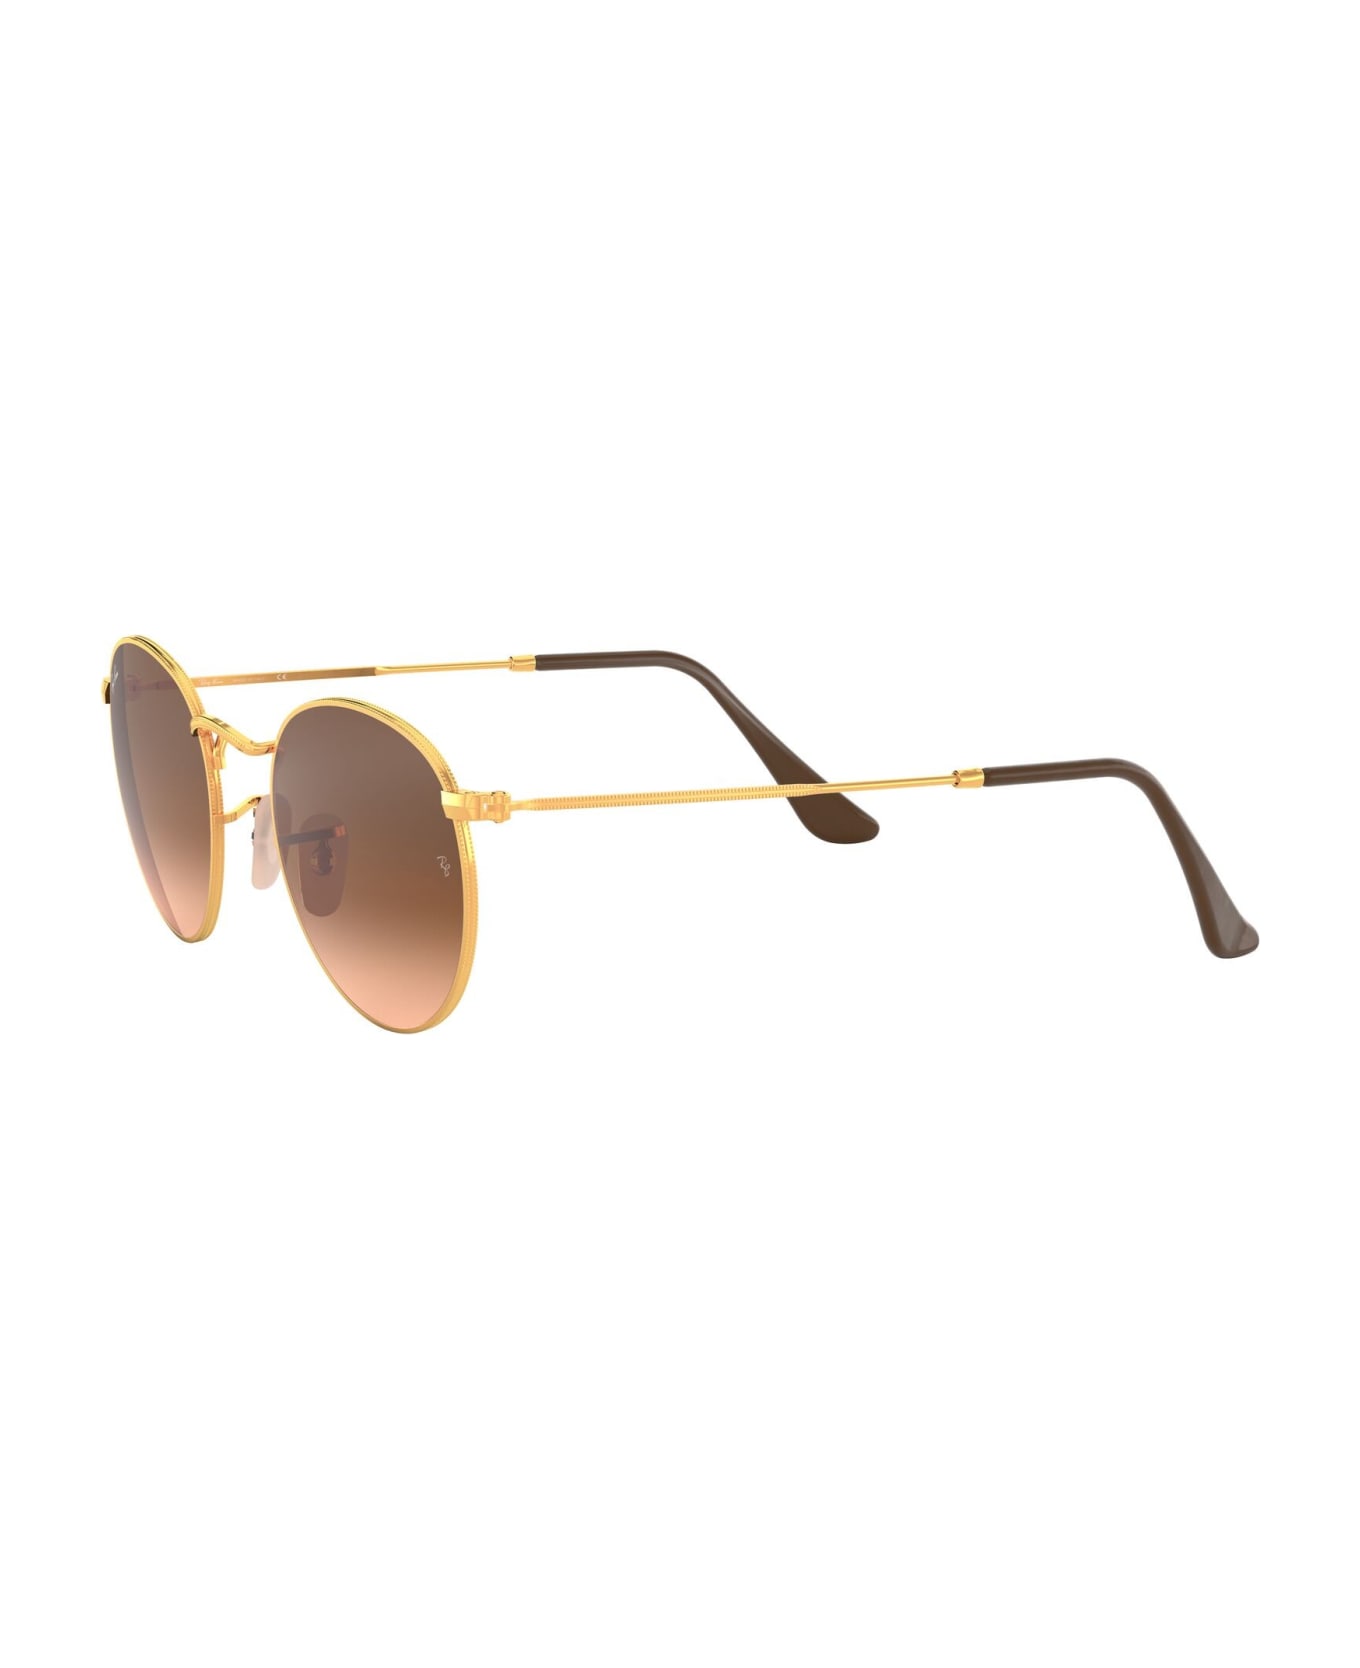 Ray-Ban Sunglasses - Oro/Marrone sfumato